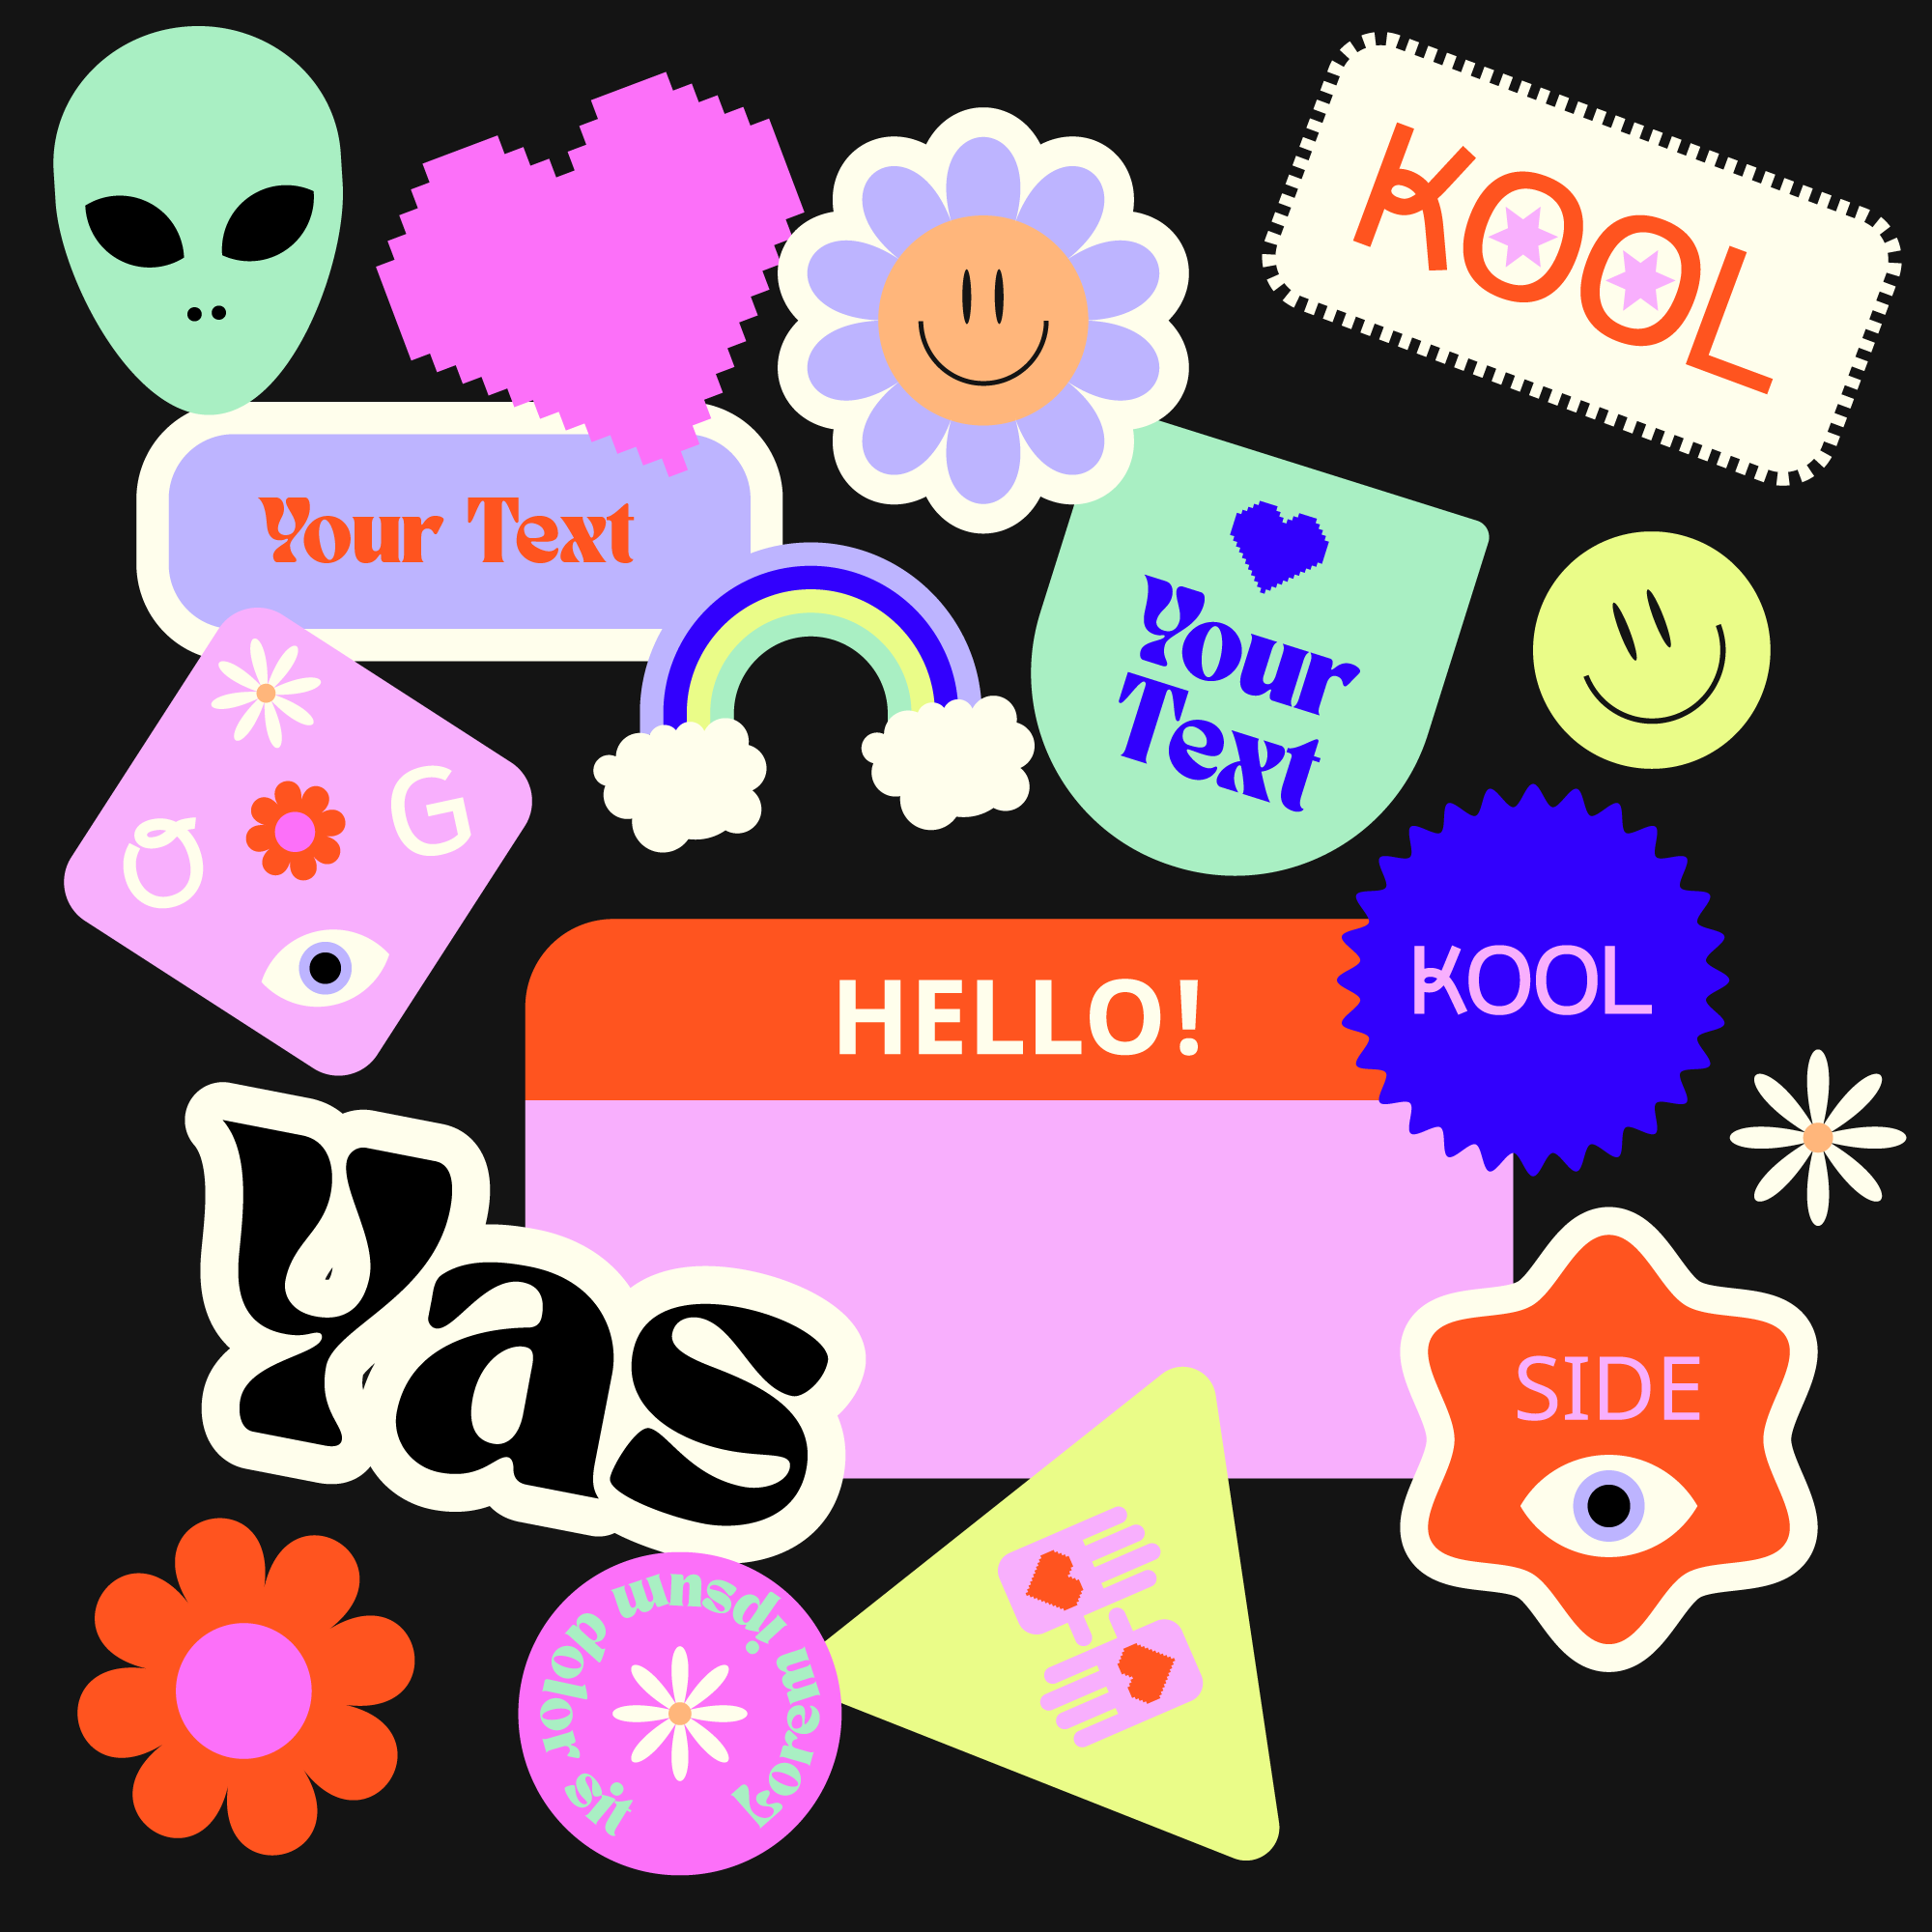 Editable Retro Style Canva SVG Badges